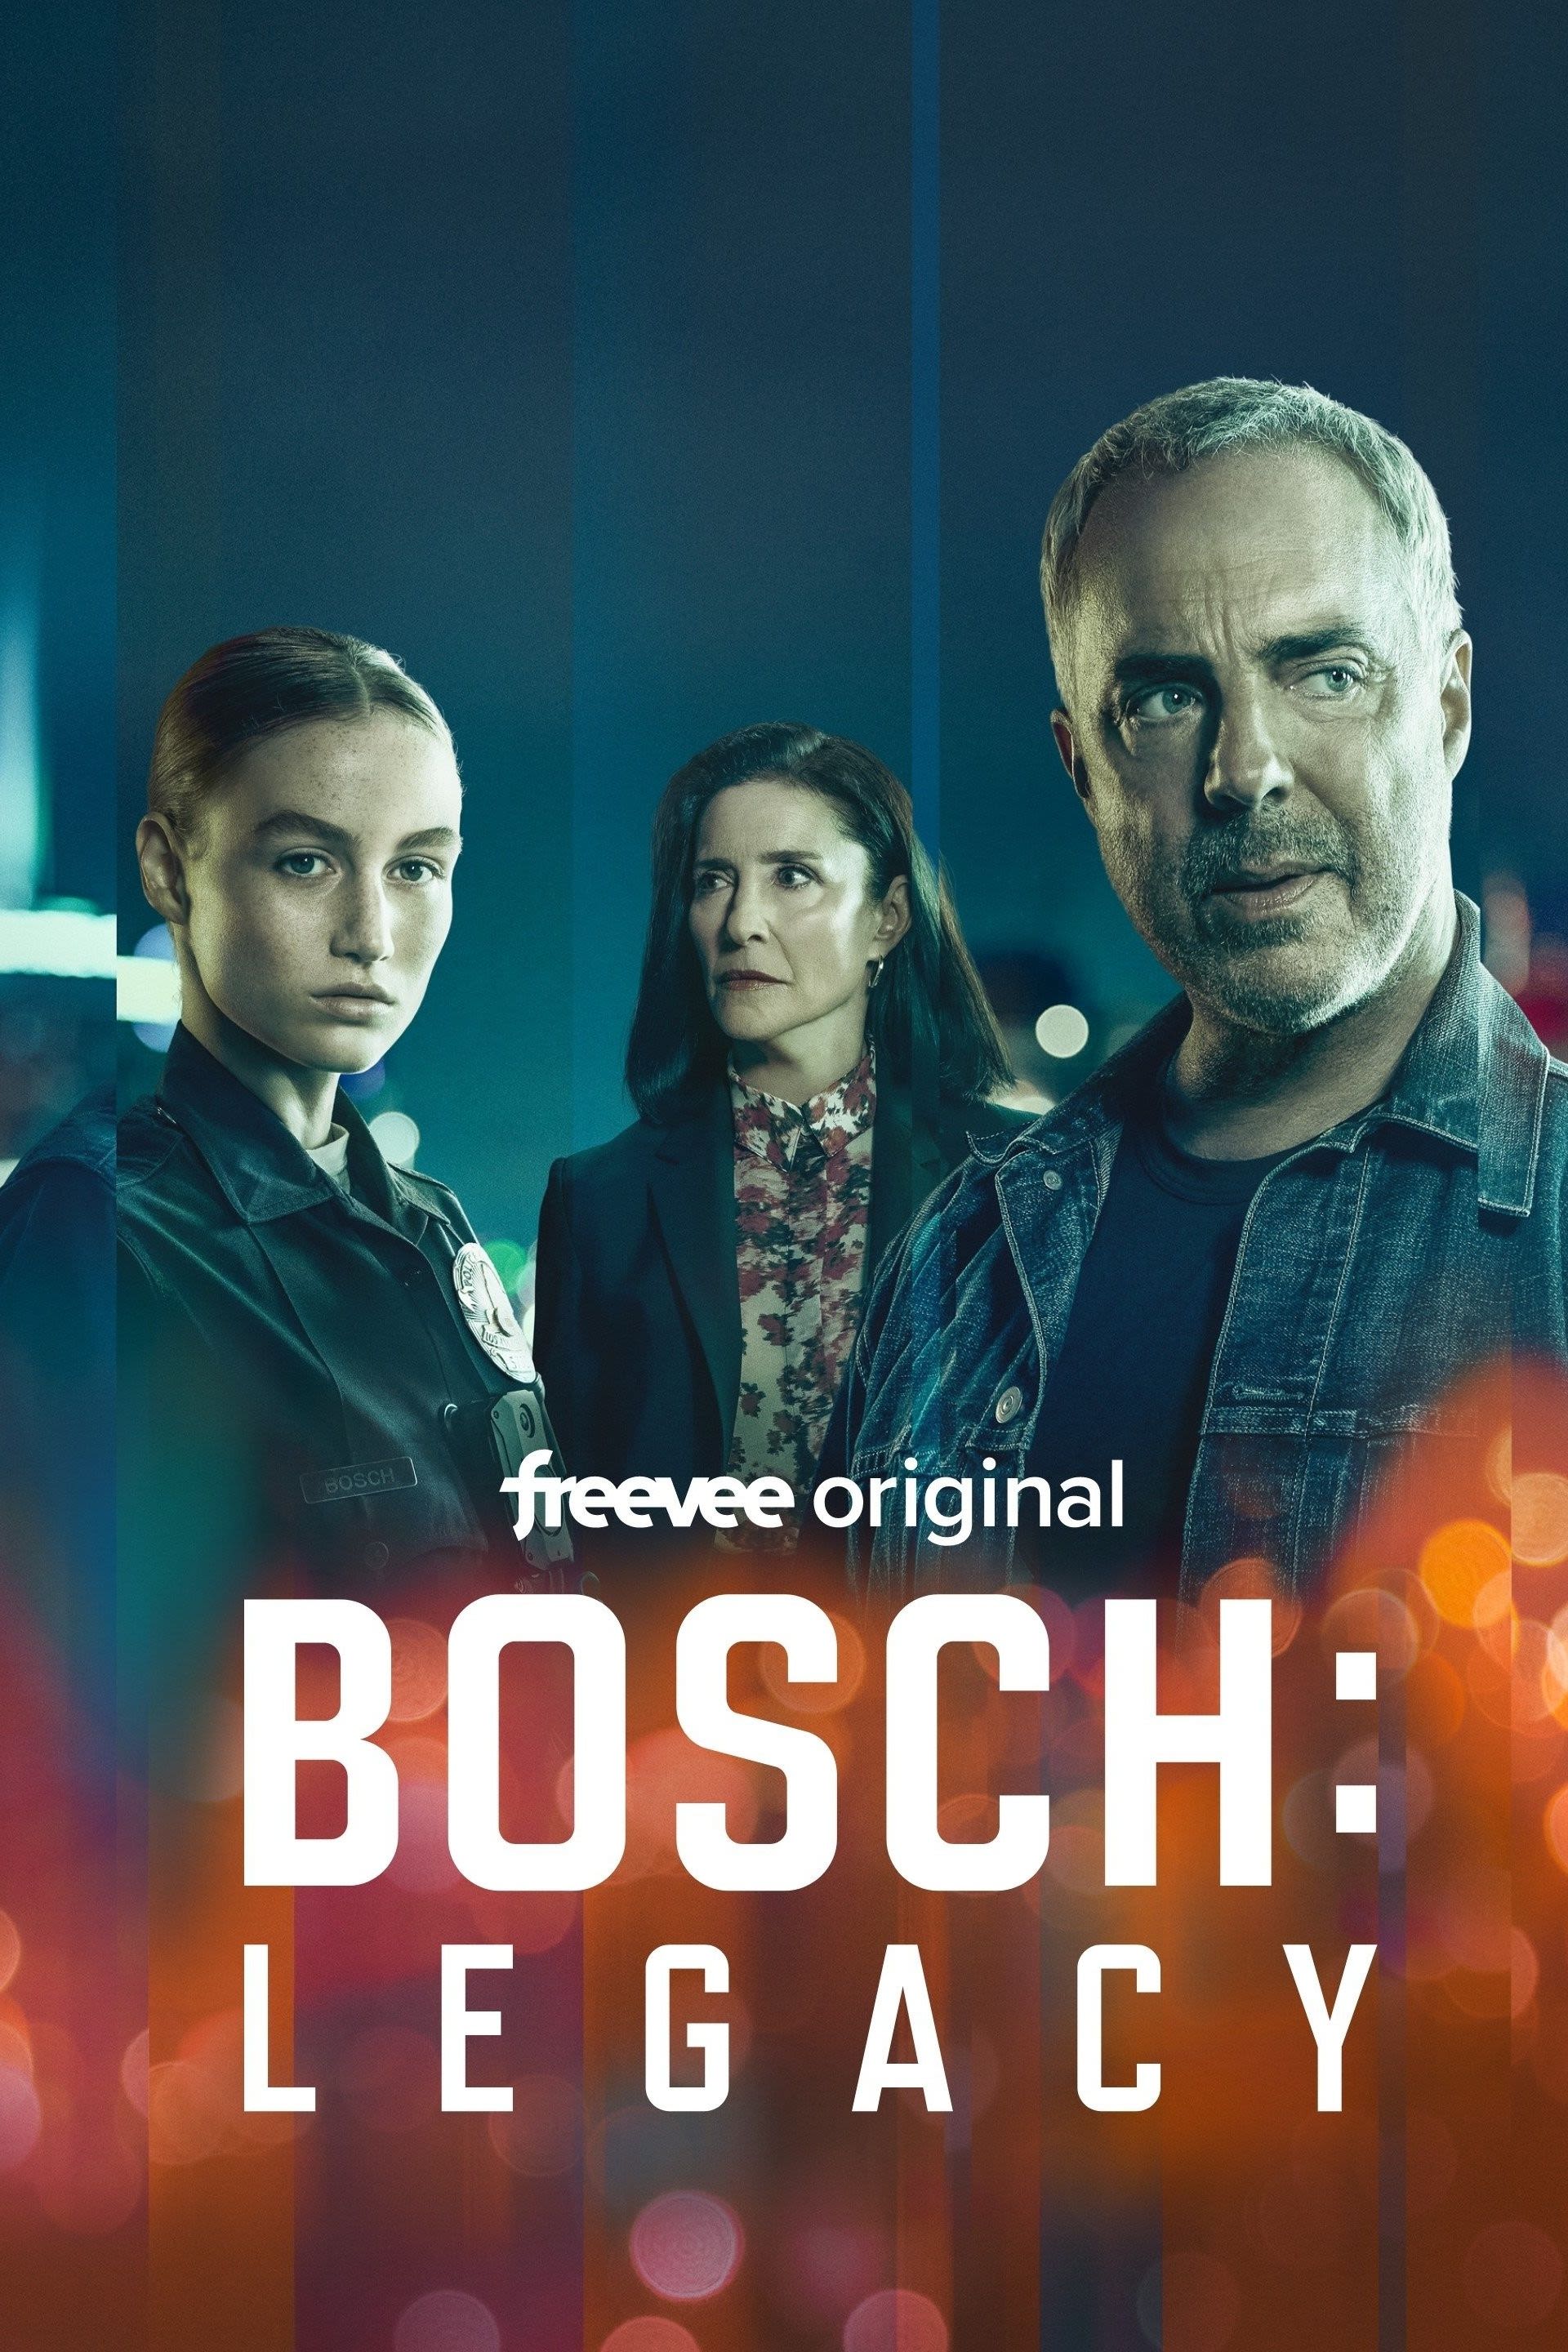 Bosch: Legacy Season 3- Will Harry Bosch Join The Dark Side As Chandler Becomes DA?